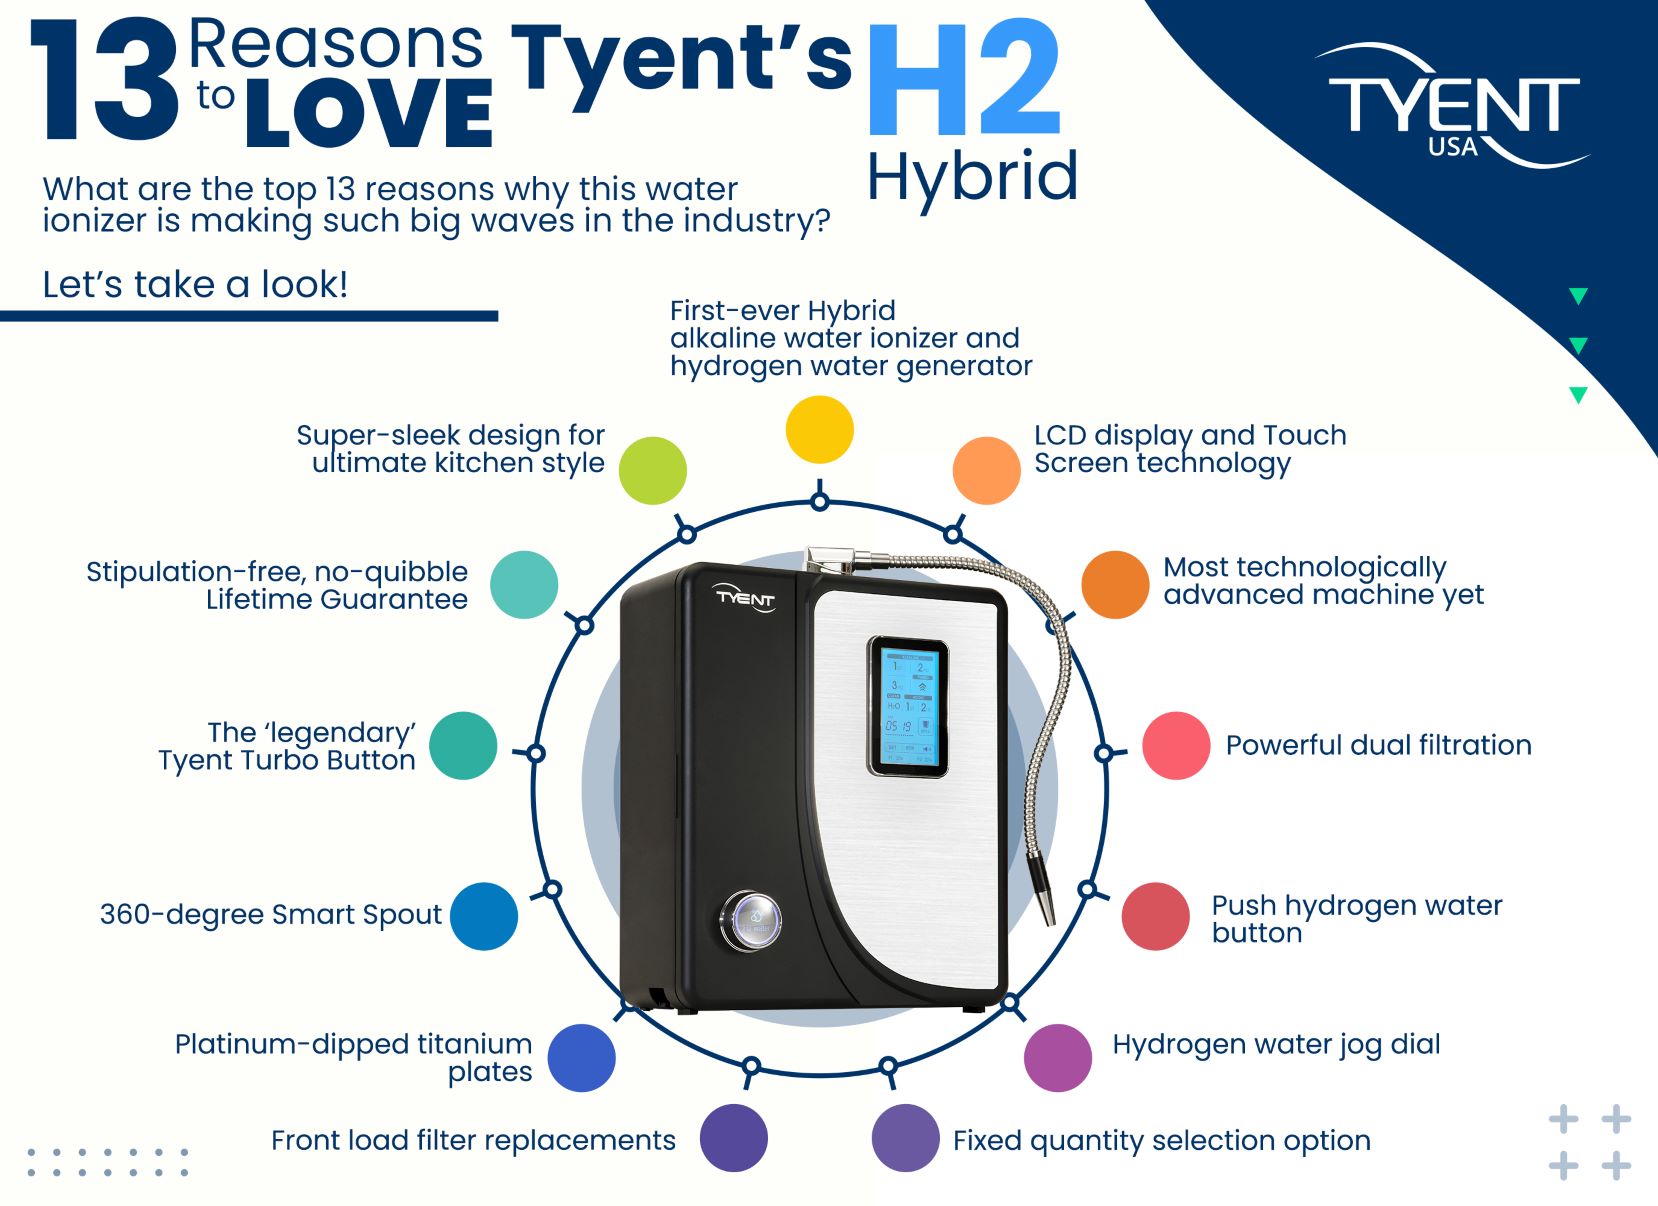 13 Reasons to Love Tyent's H2 Hybrid